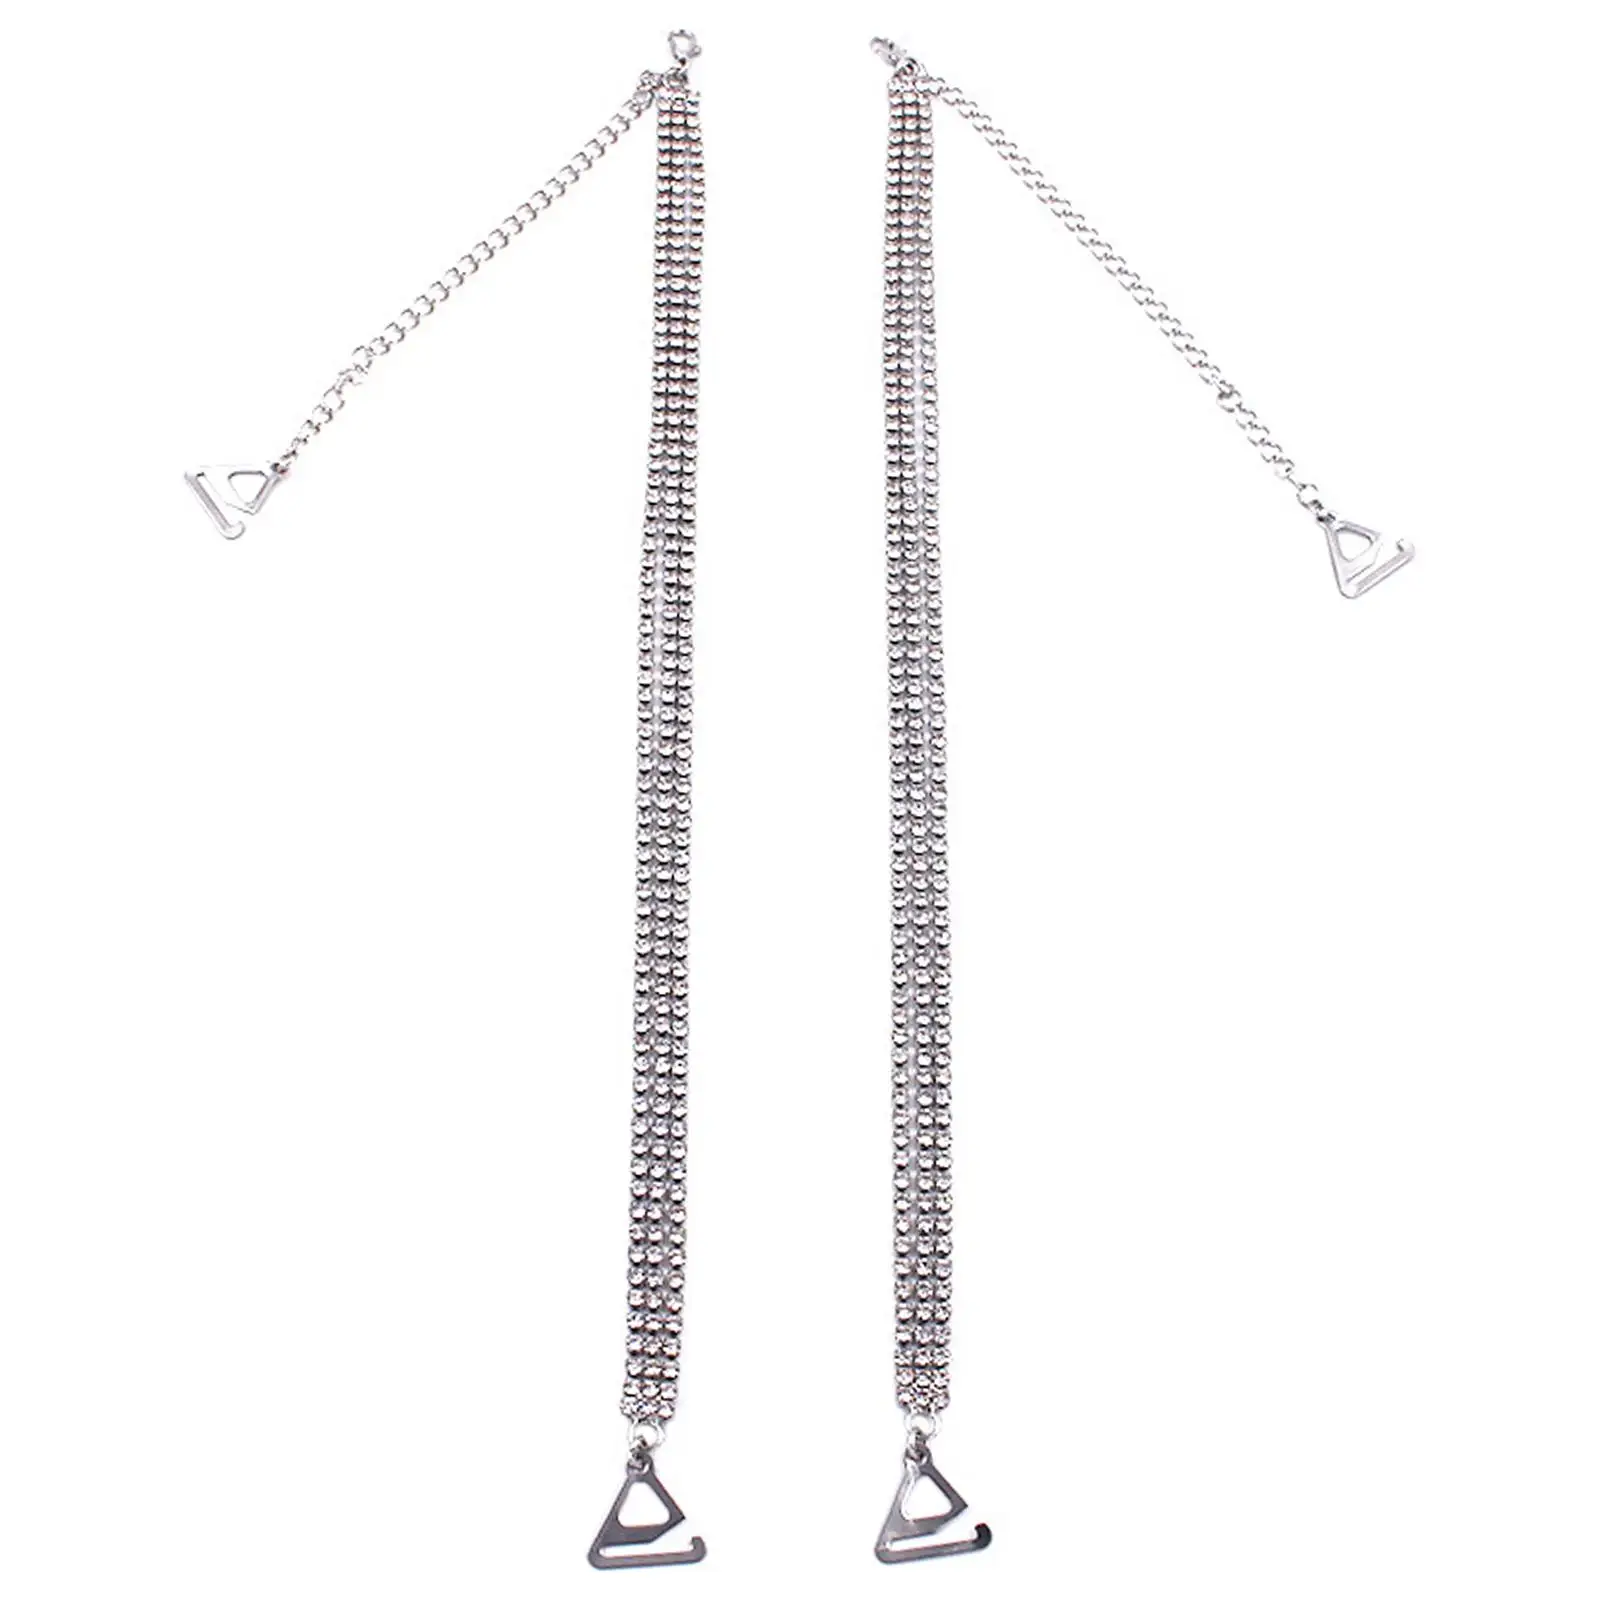 1 Pair Women's Ladies Adjustable Crystal Diamante Rhinestone Bra Shoulder Straps